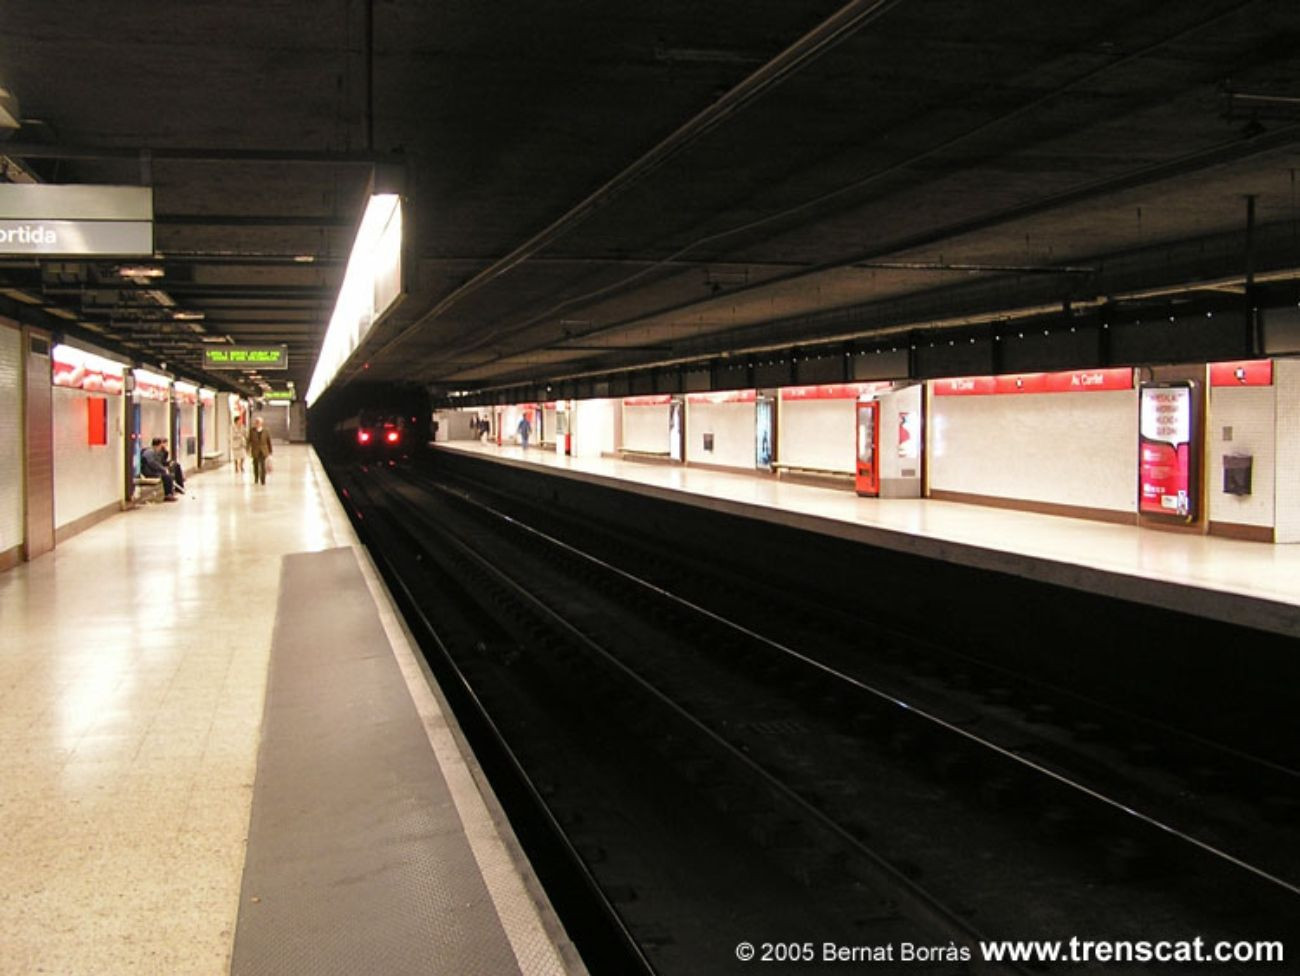 Estación de metro Av. Carrilet en L'Hospitalet de Llobregat / TRENSCAT.COM